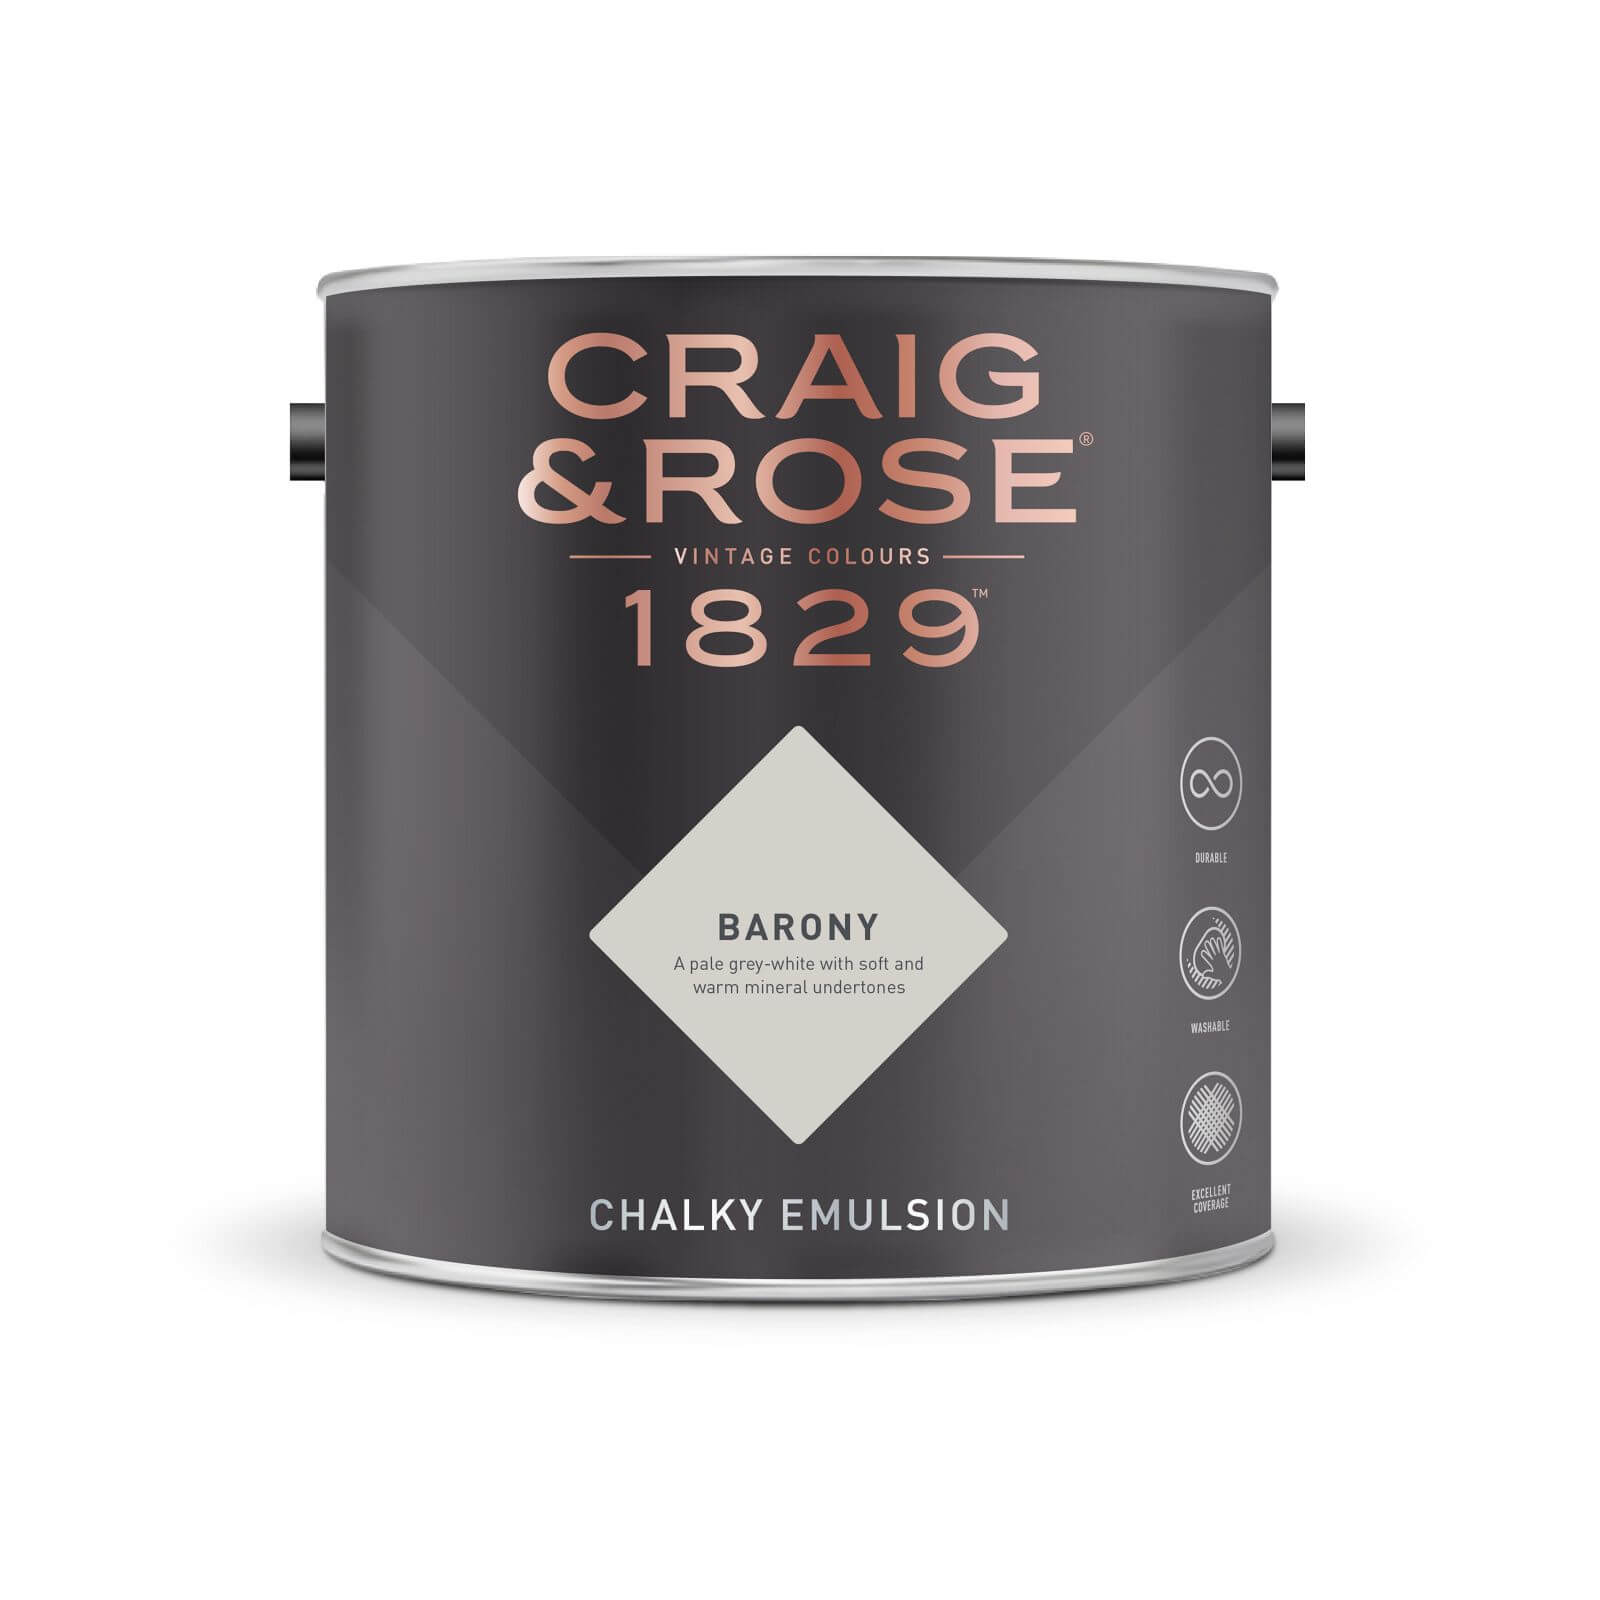 Craig & Rose 1829 Chalky Emulsion Paint Barony - 2.5L